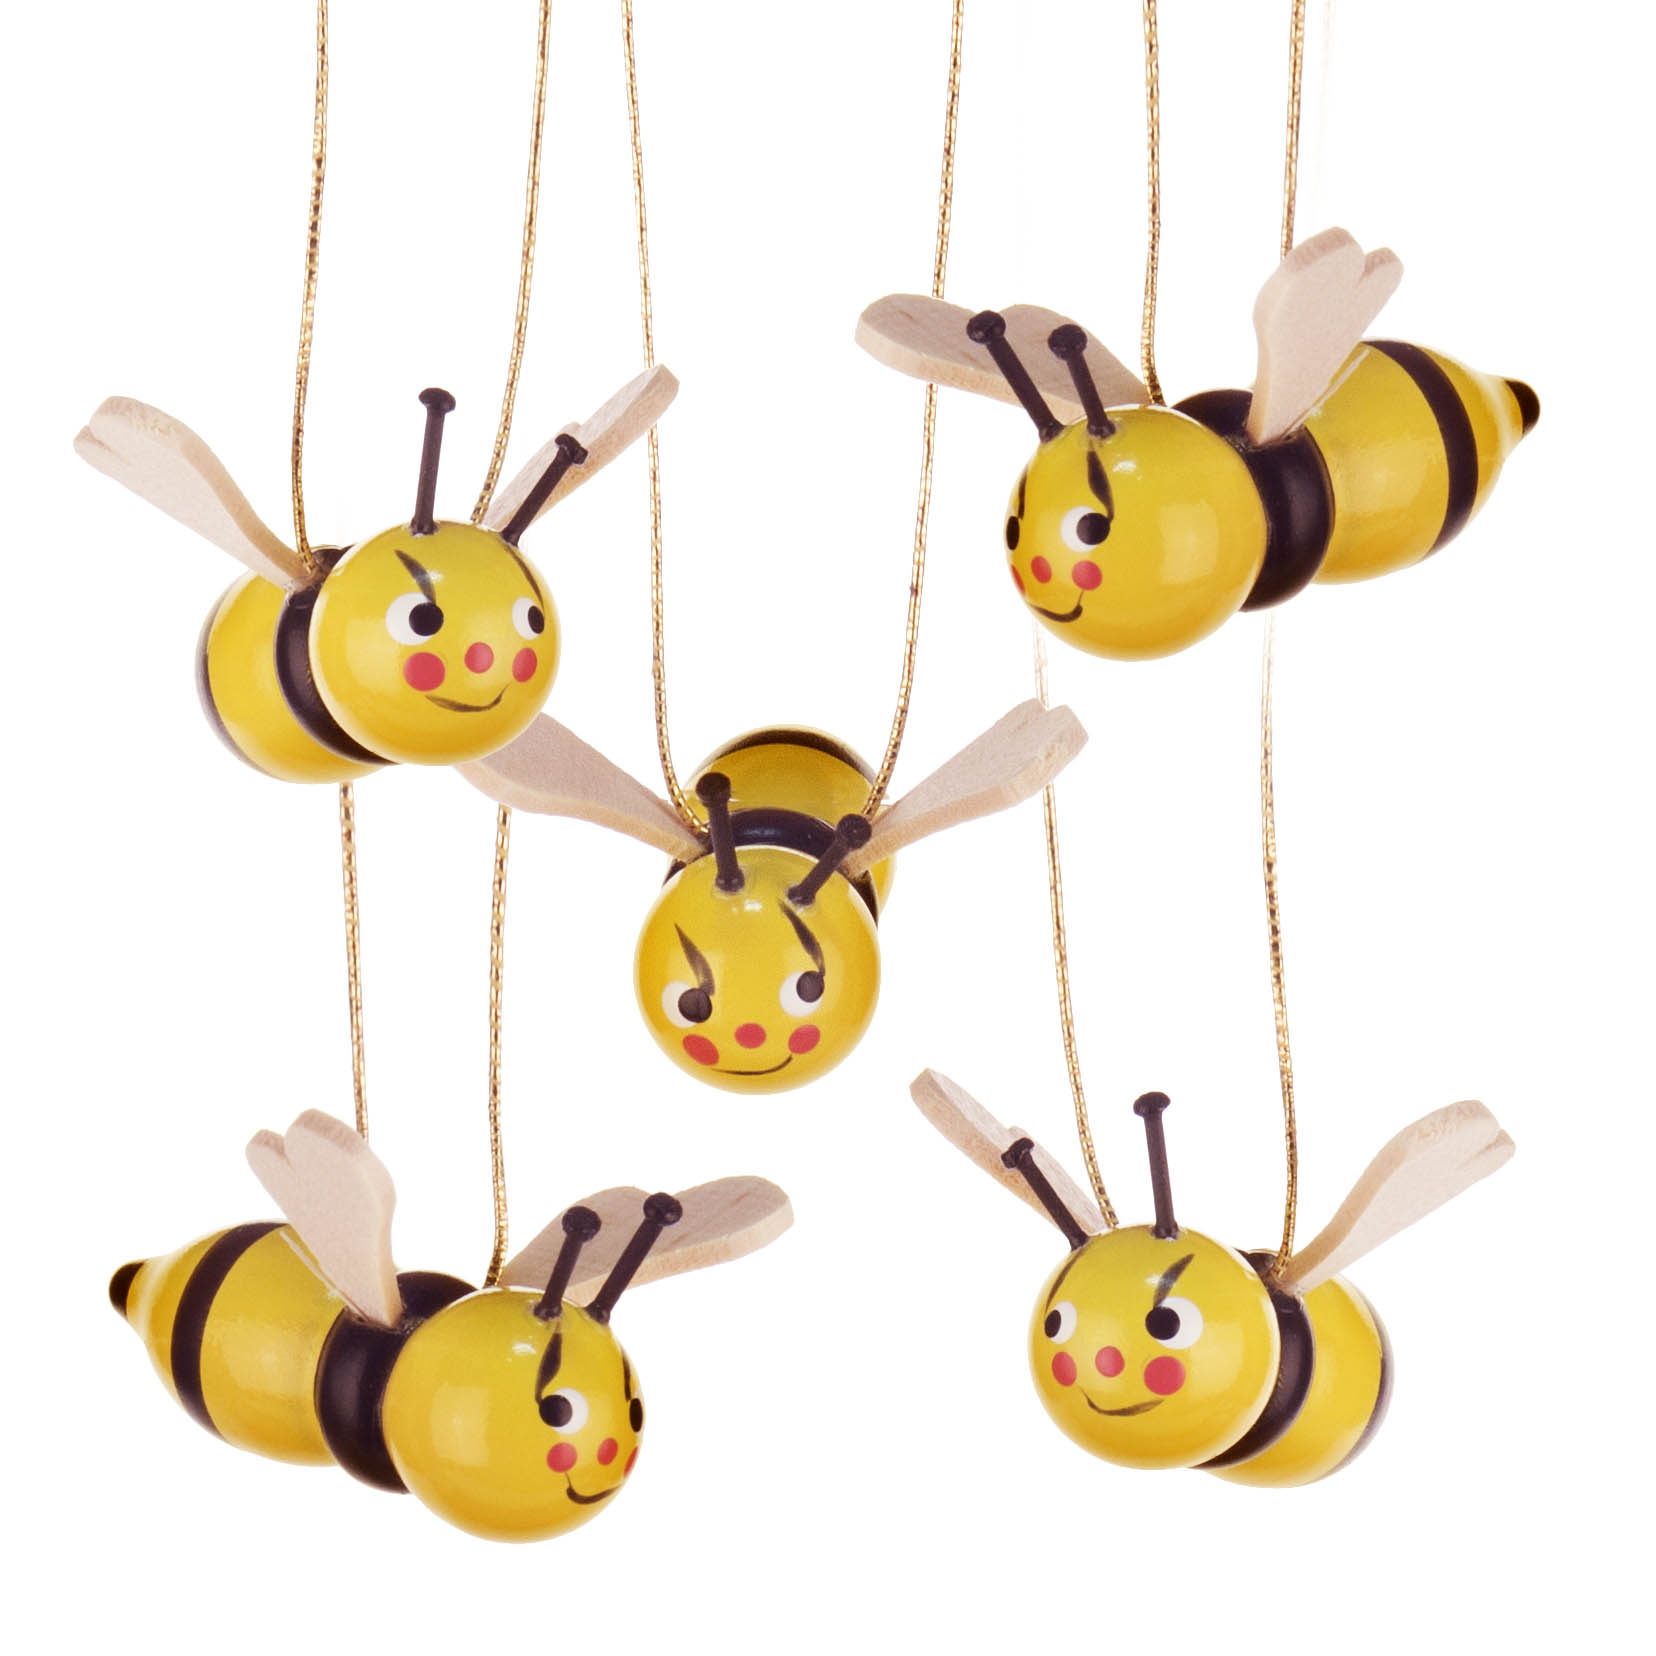 Behang Bienen (5) im Dregeno Online Shop günstig kaufen